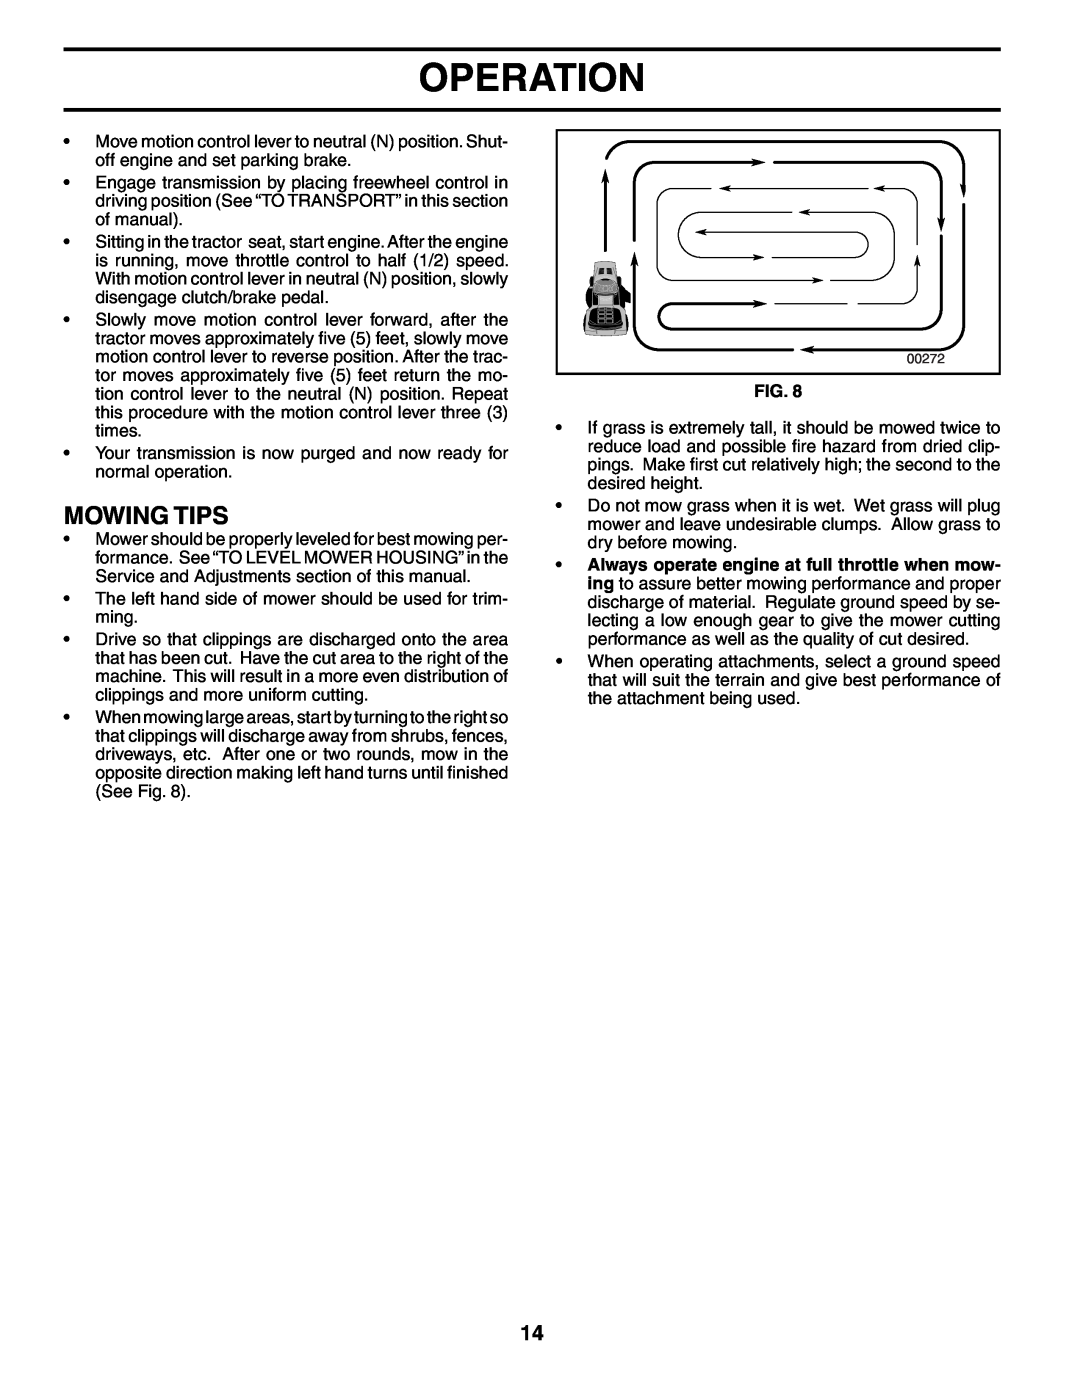 Poulan 187301 manual Mowing Tips, Operation 